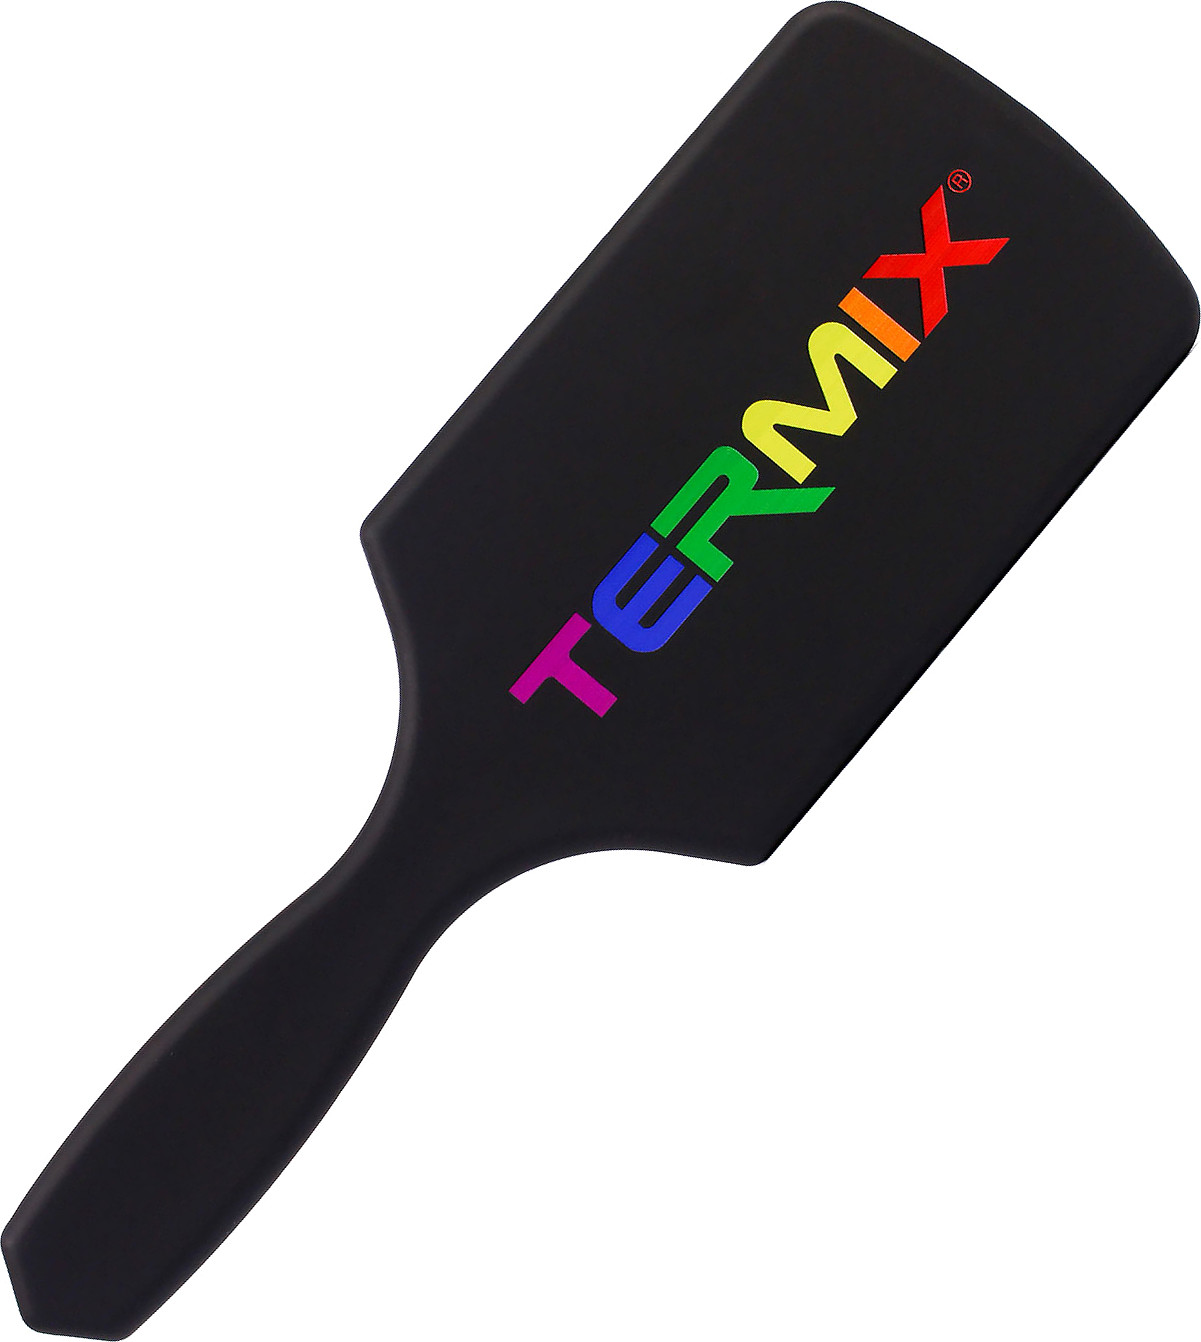  Termix Paddle Brush Pride Edition, black 